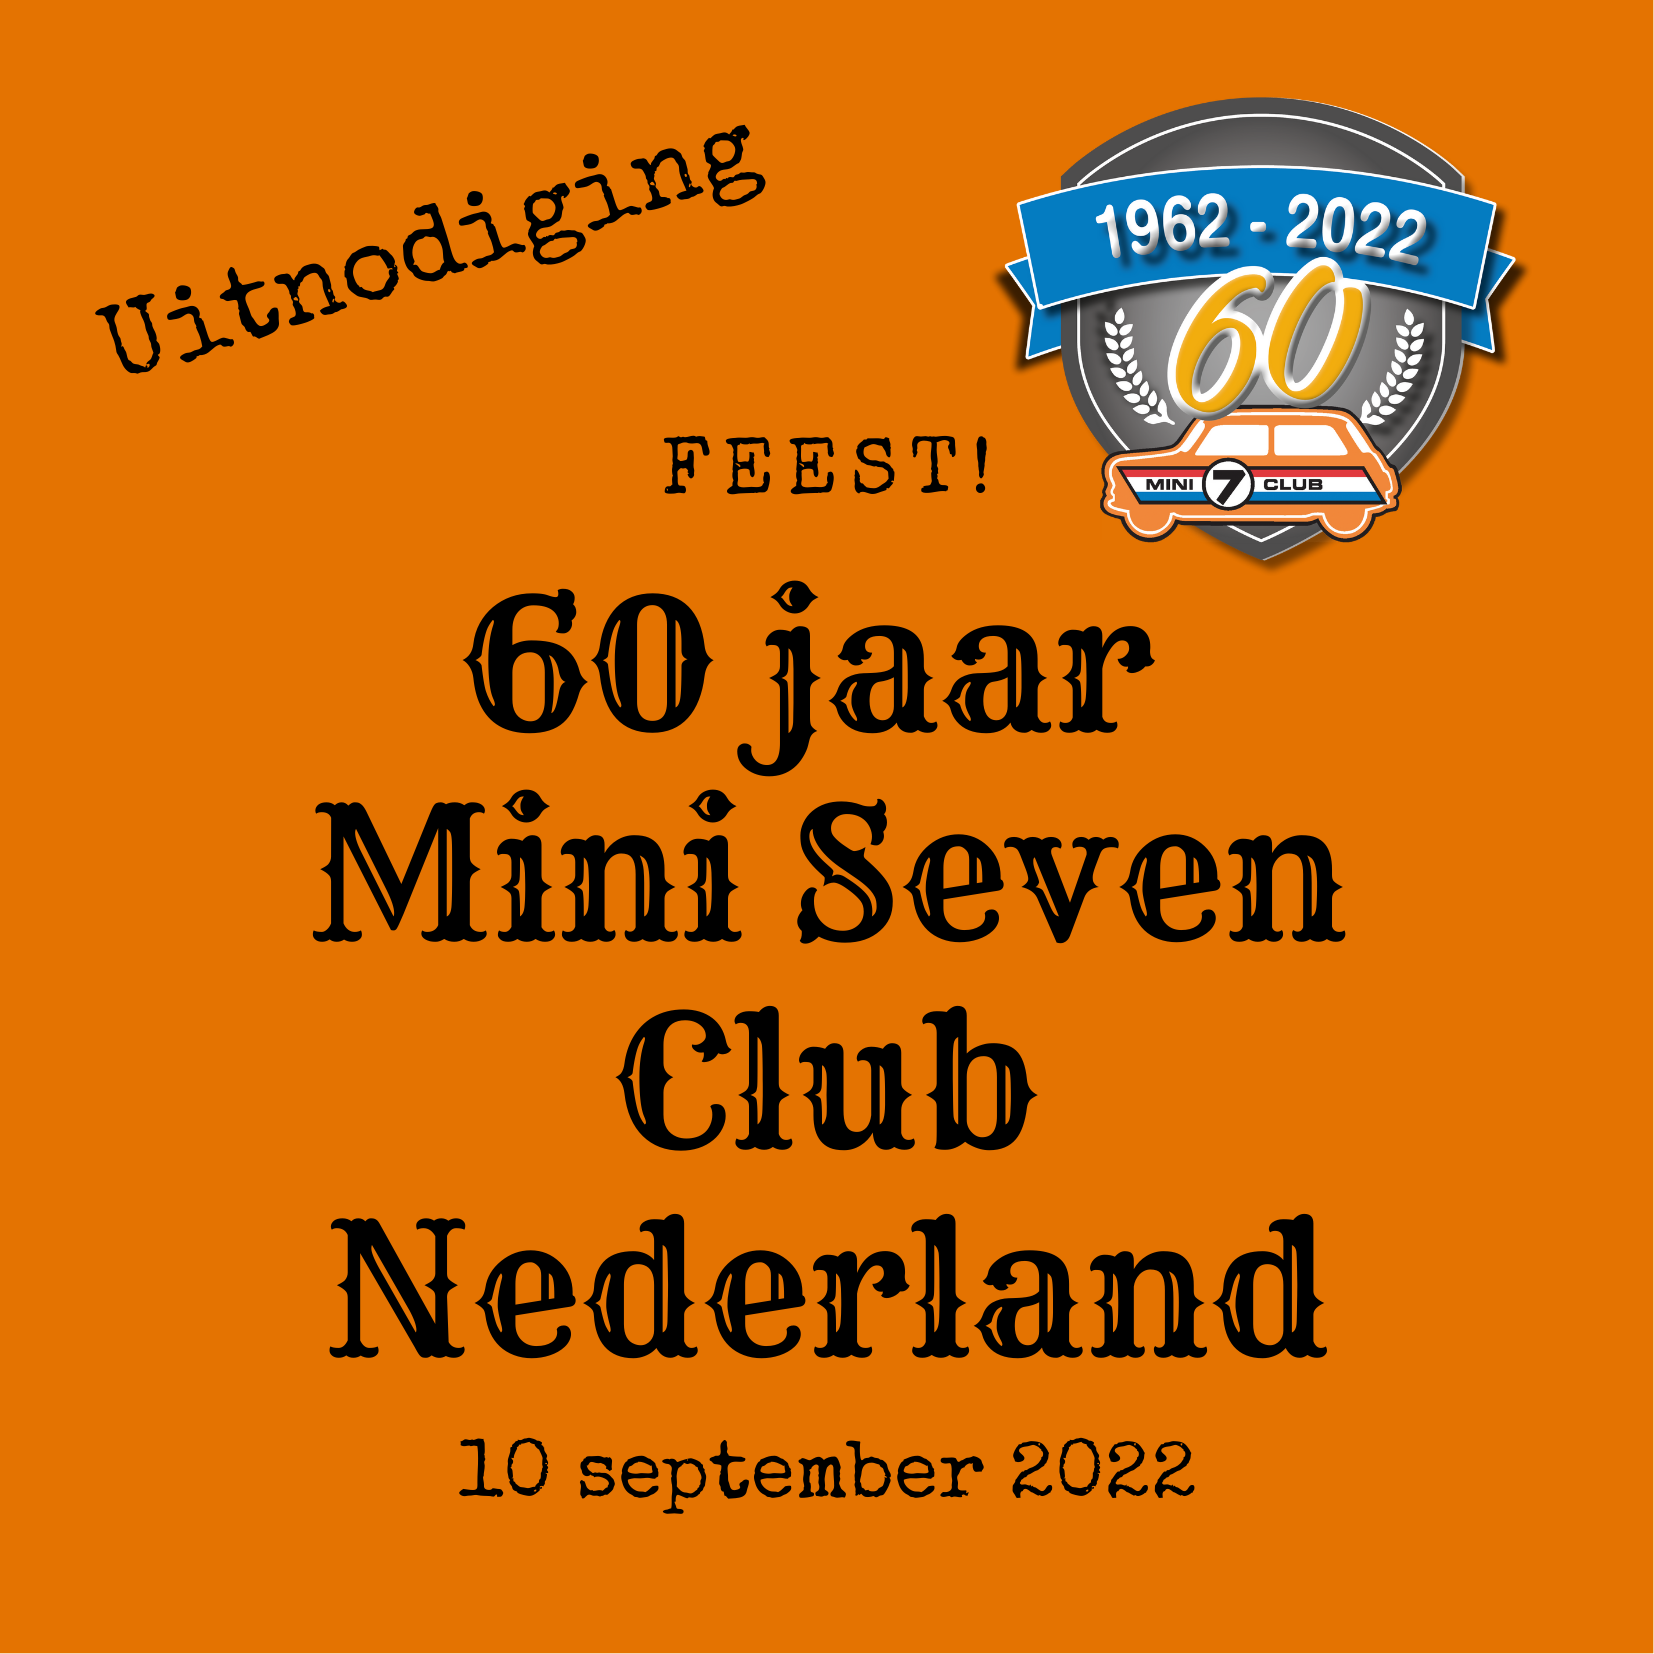 Uitnodiging feest 60 jaar Mini Seven Club Nederland